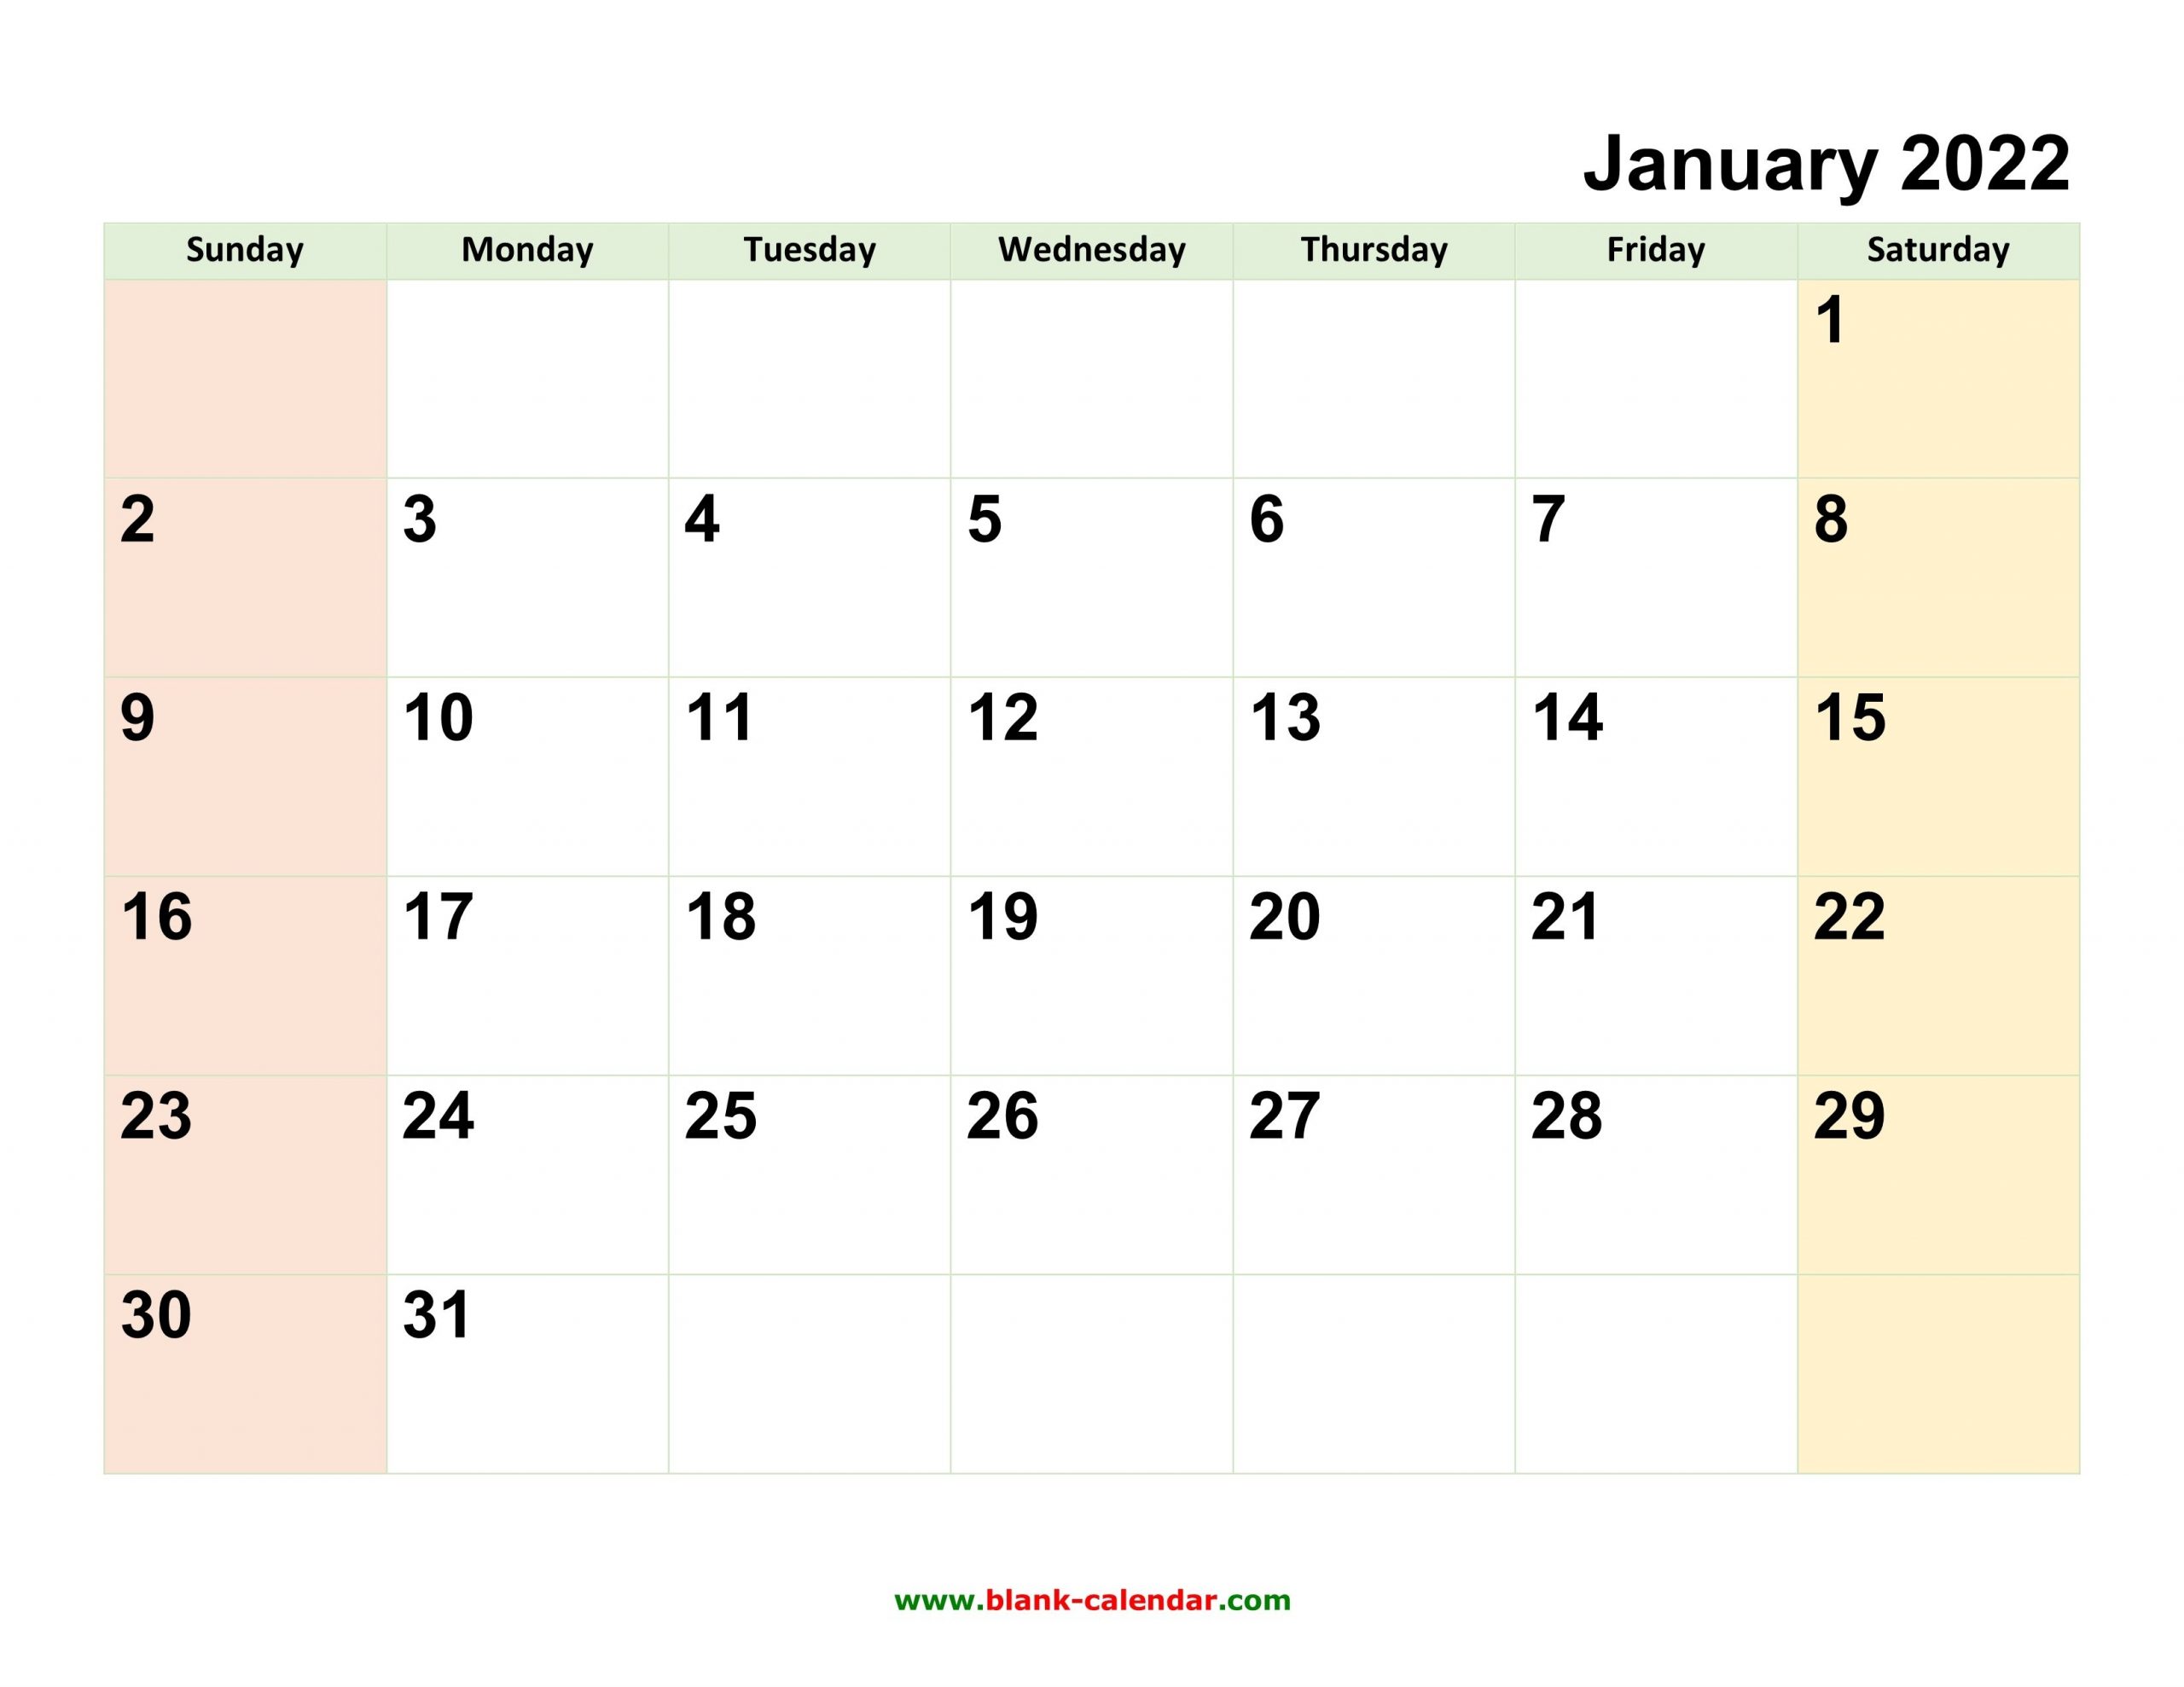 Free Editable Calendar Template 2022